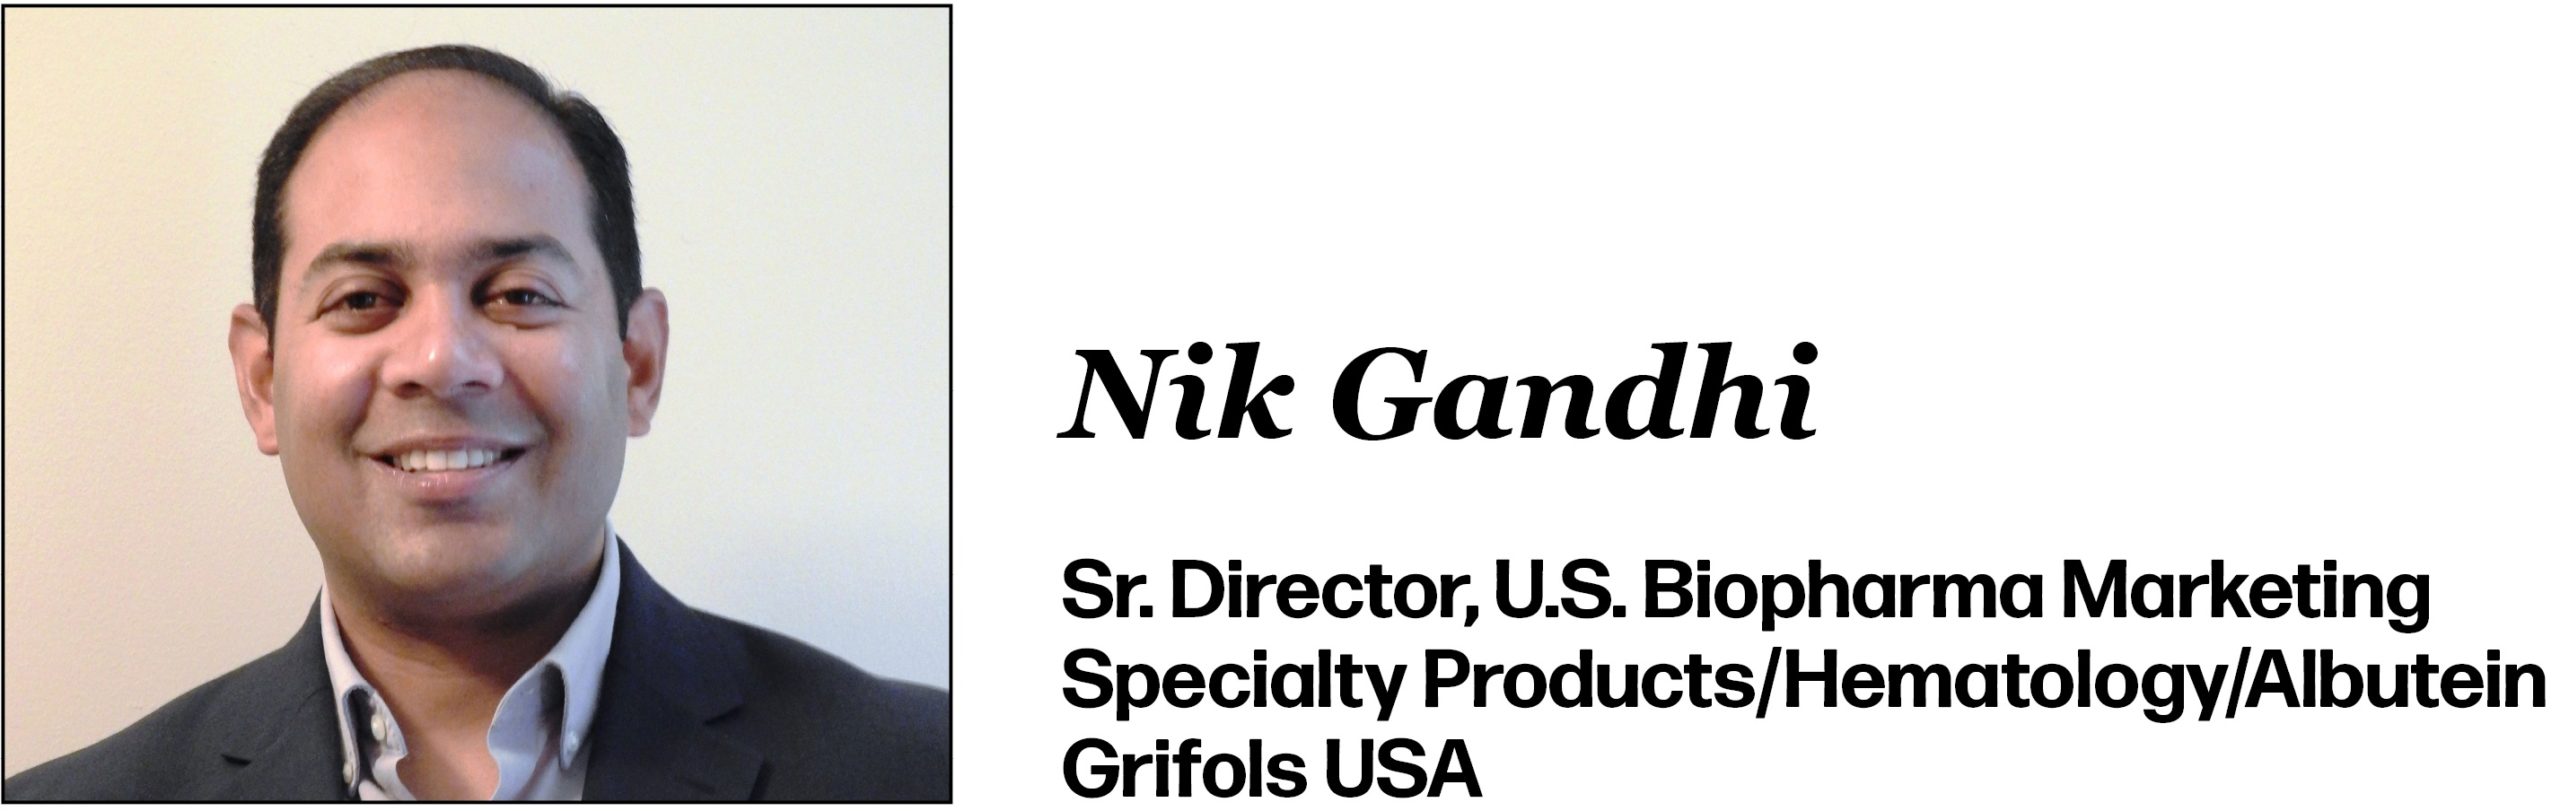 Nik Gandhi is Sr. Director, U.S. Biopharma Marketing, Specialty Products/Hematology/Albutein at Grifols USA.